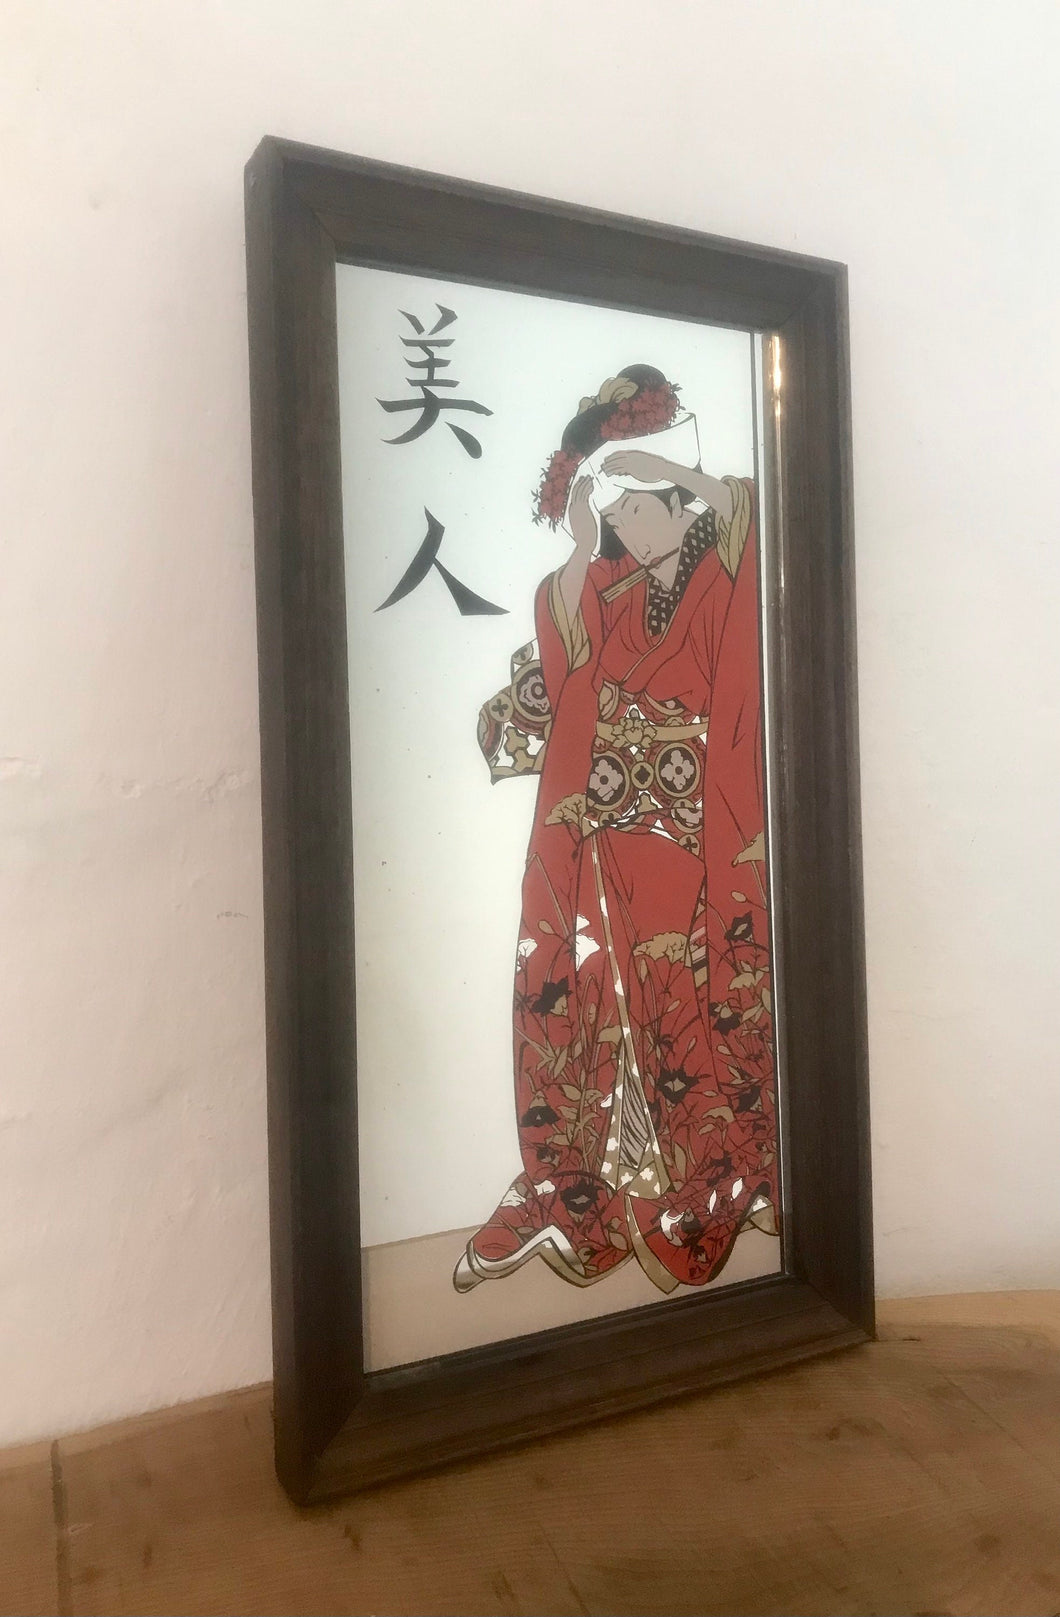 Wonderful Japanese geisha vintage pictures mirror framed stylish wall art